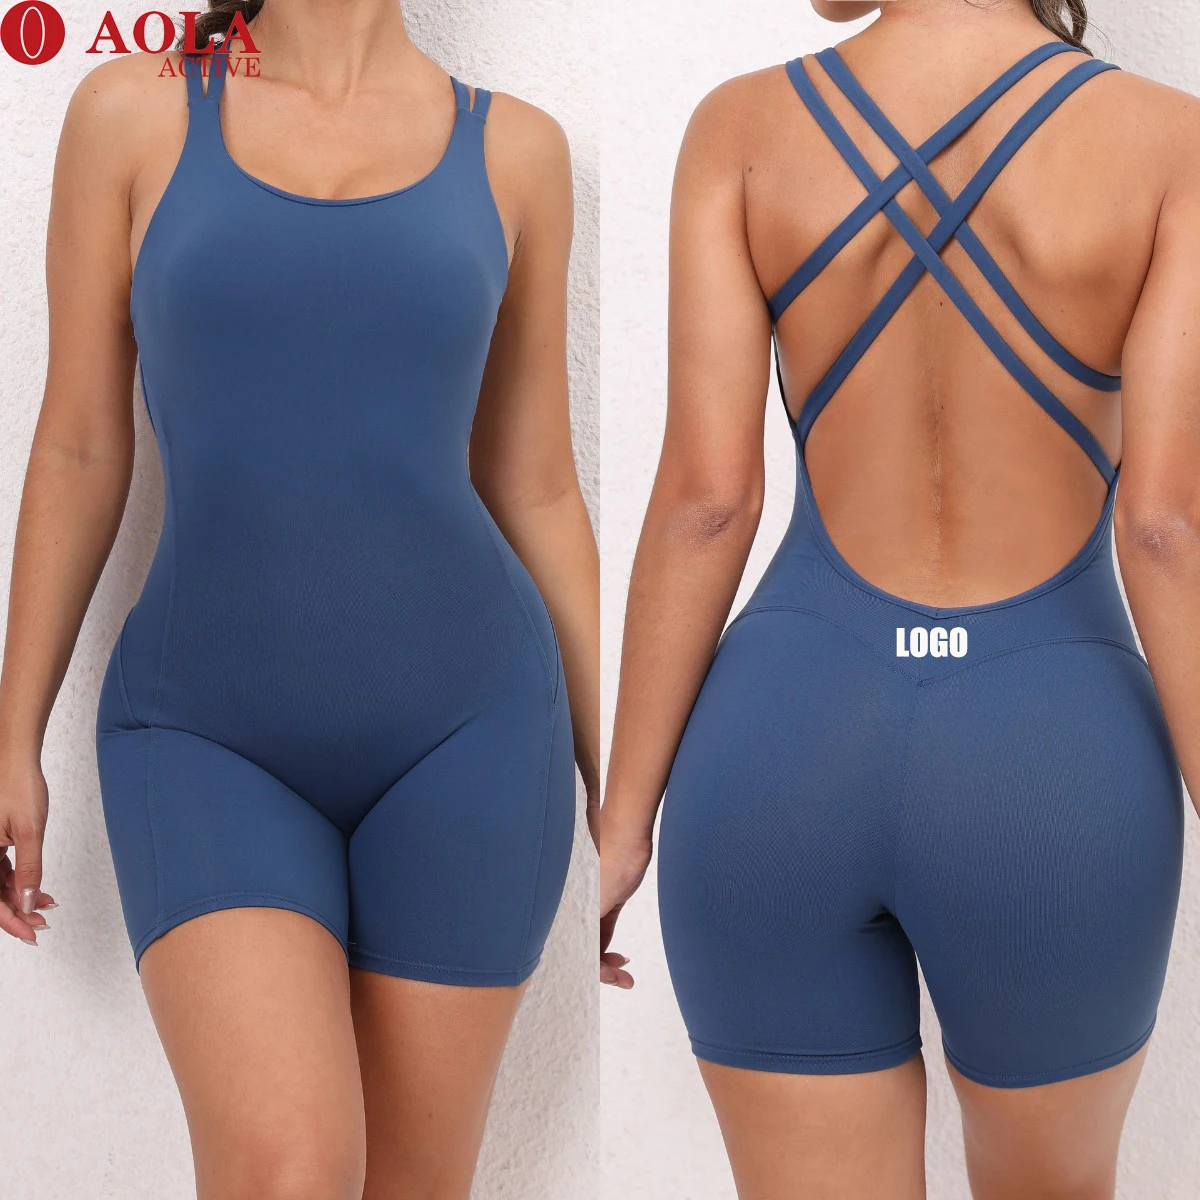 

AOLA Jumpsuit Bodysuit Yoga Fitness Sets Breathable Clothes Yoga Workout Seamless for Women Pants Plus Size Women's Clothing